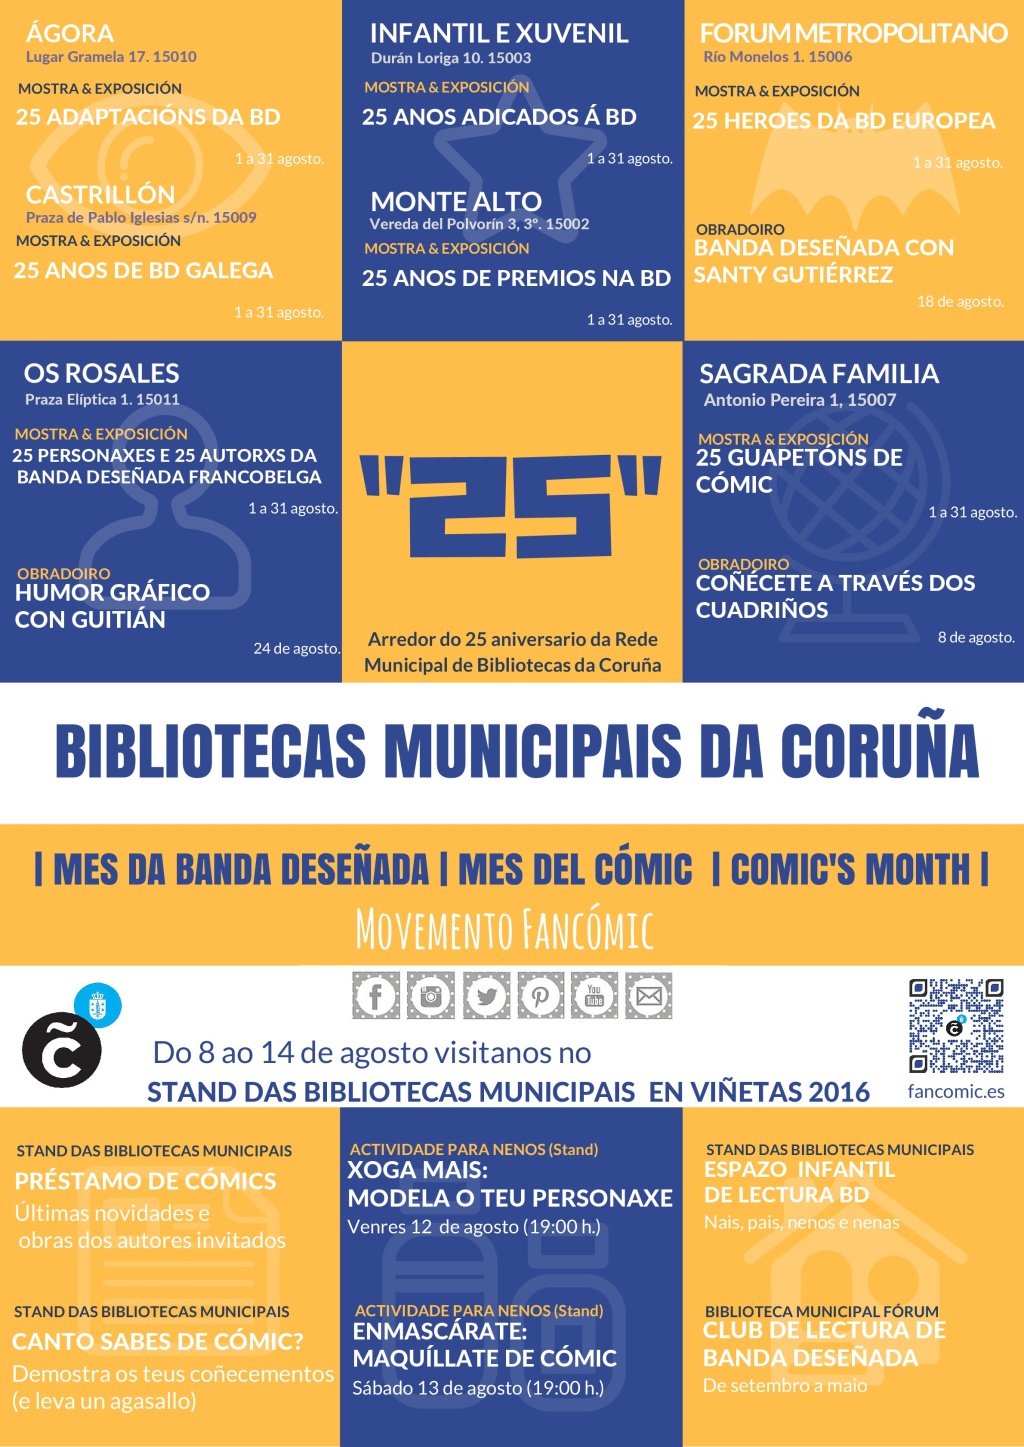 #Viñetas2016: Actividades nas Bibliotecas Municipais